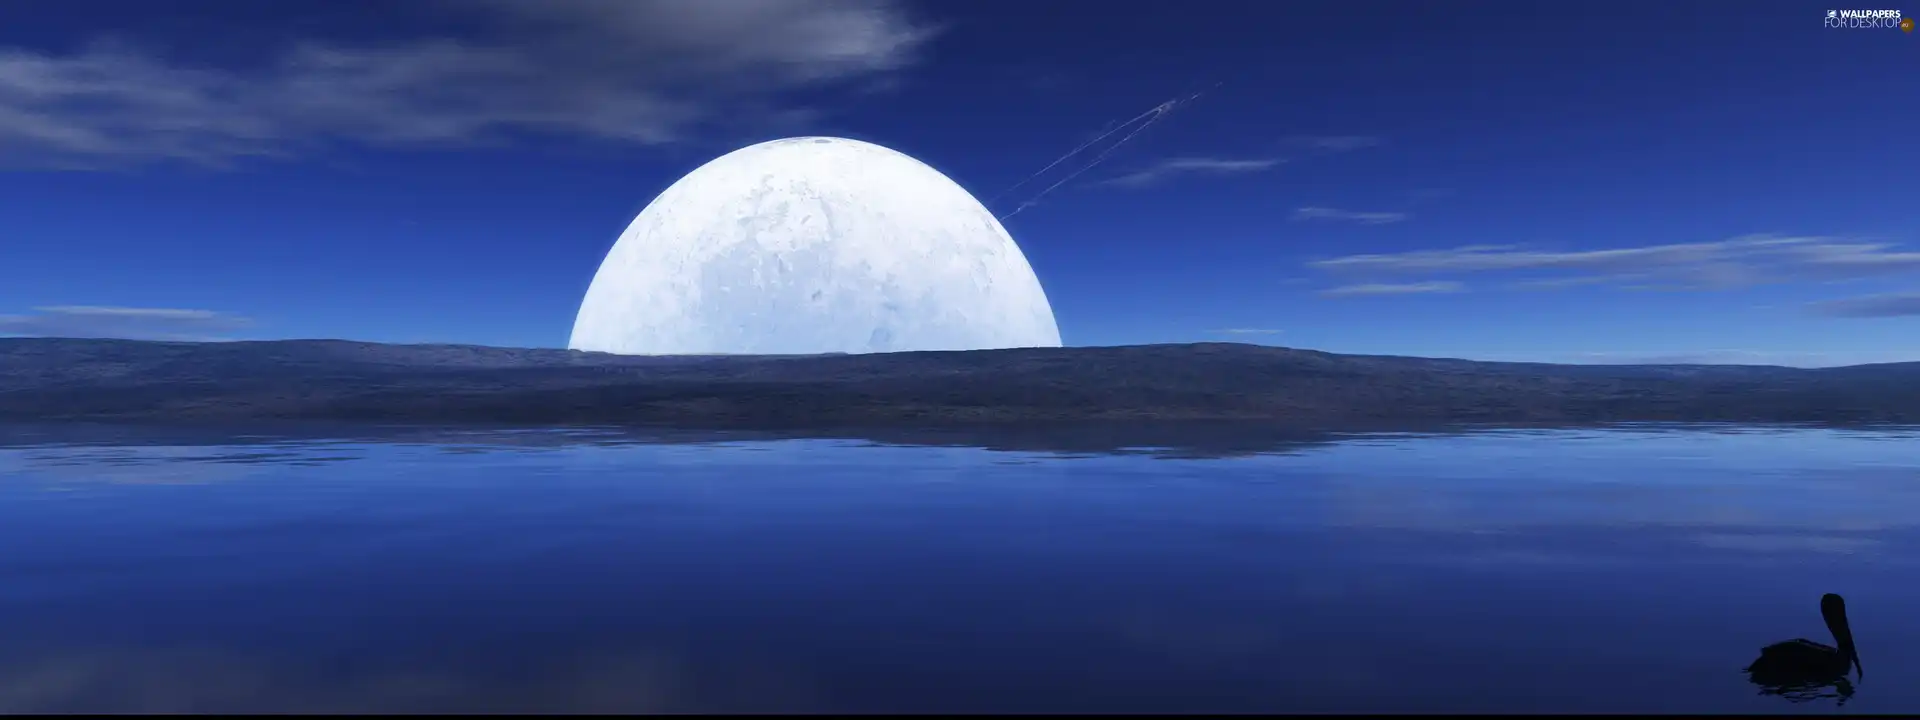 moon, lake, declining